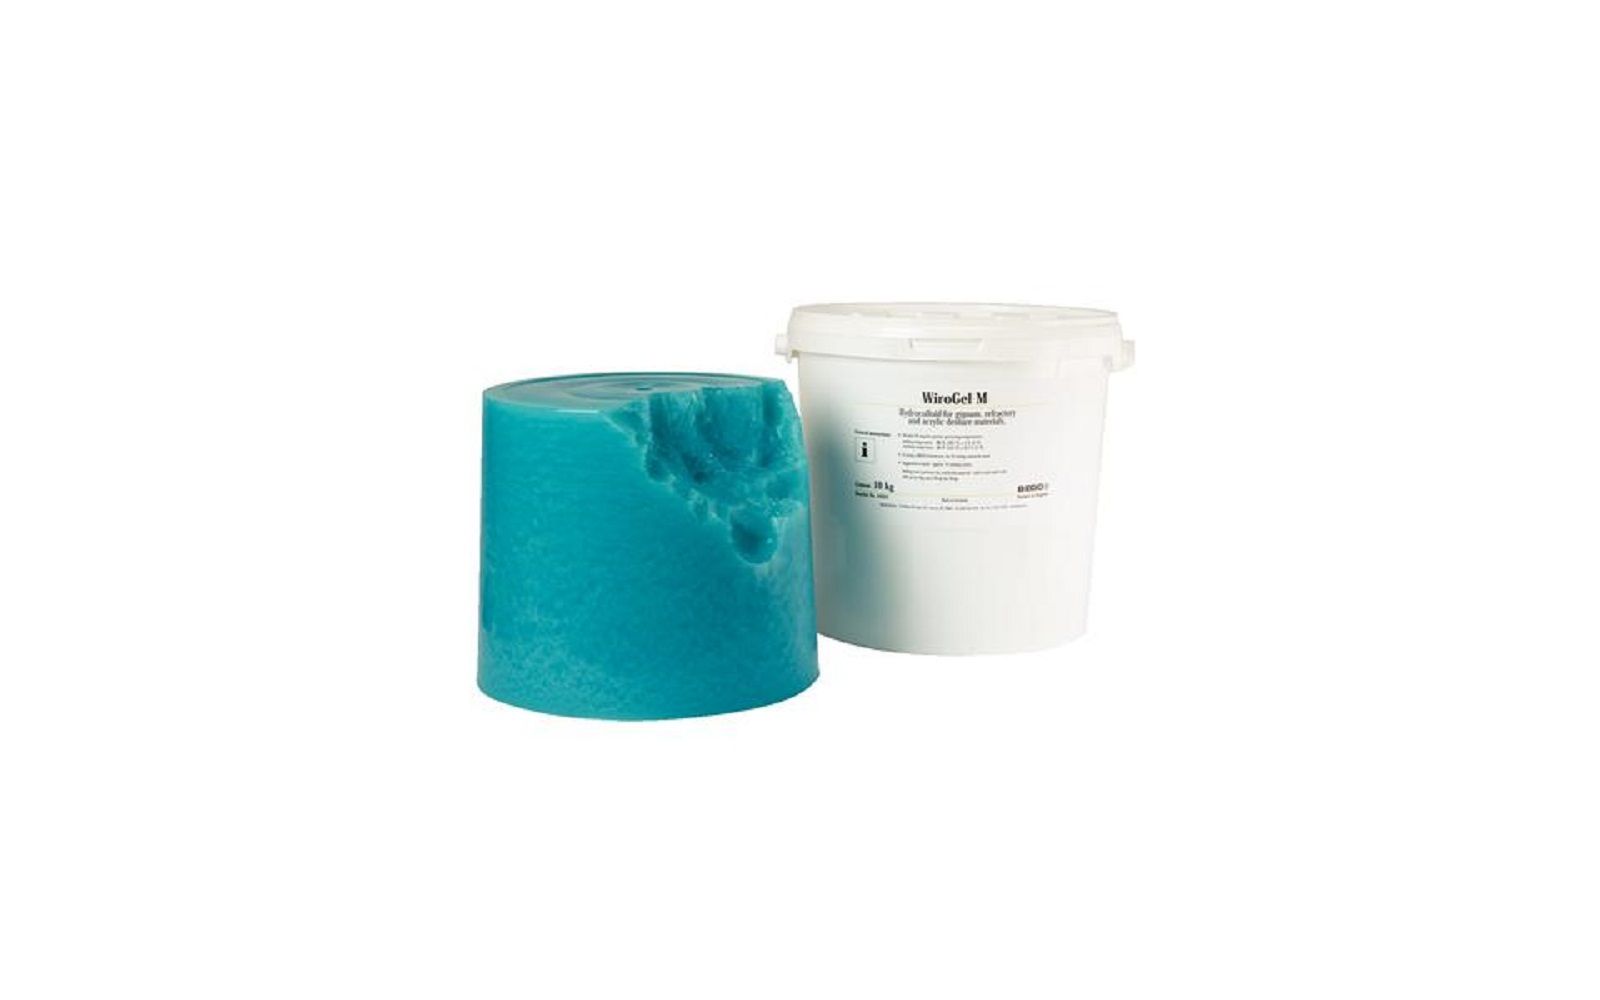 Wirogel m hydrocolloid duplicating material – blue/green, 10 kg tub